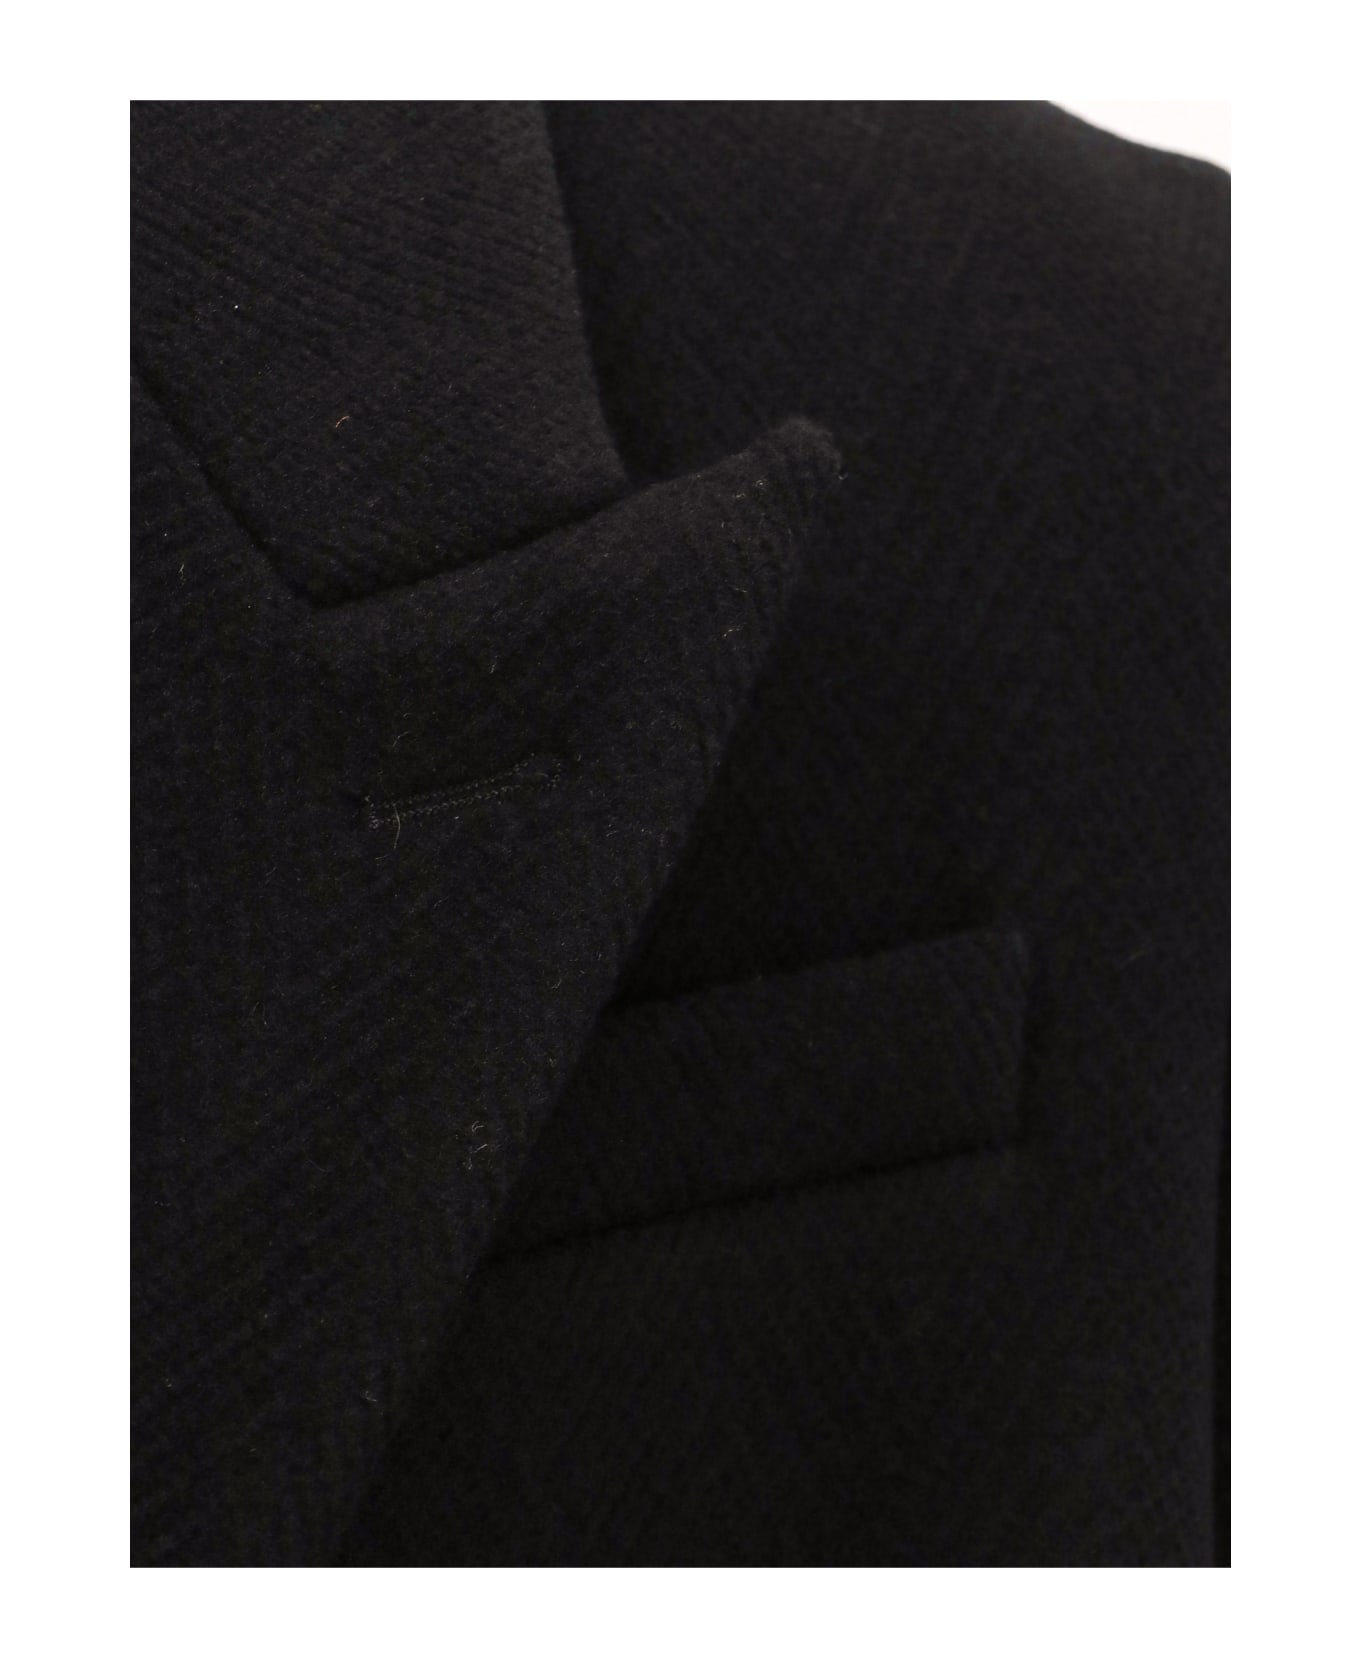 Saint Laurent Responsible Wool Coat - Black コート